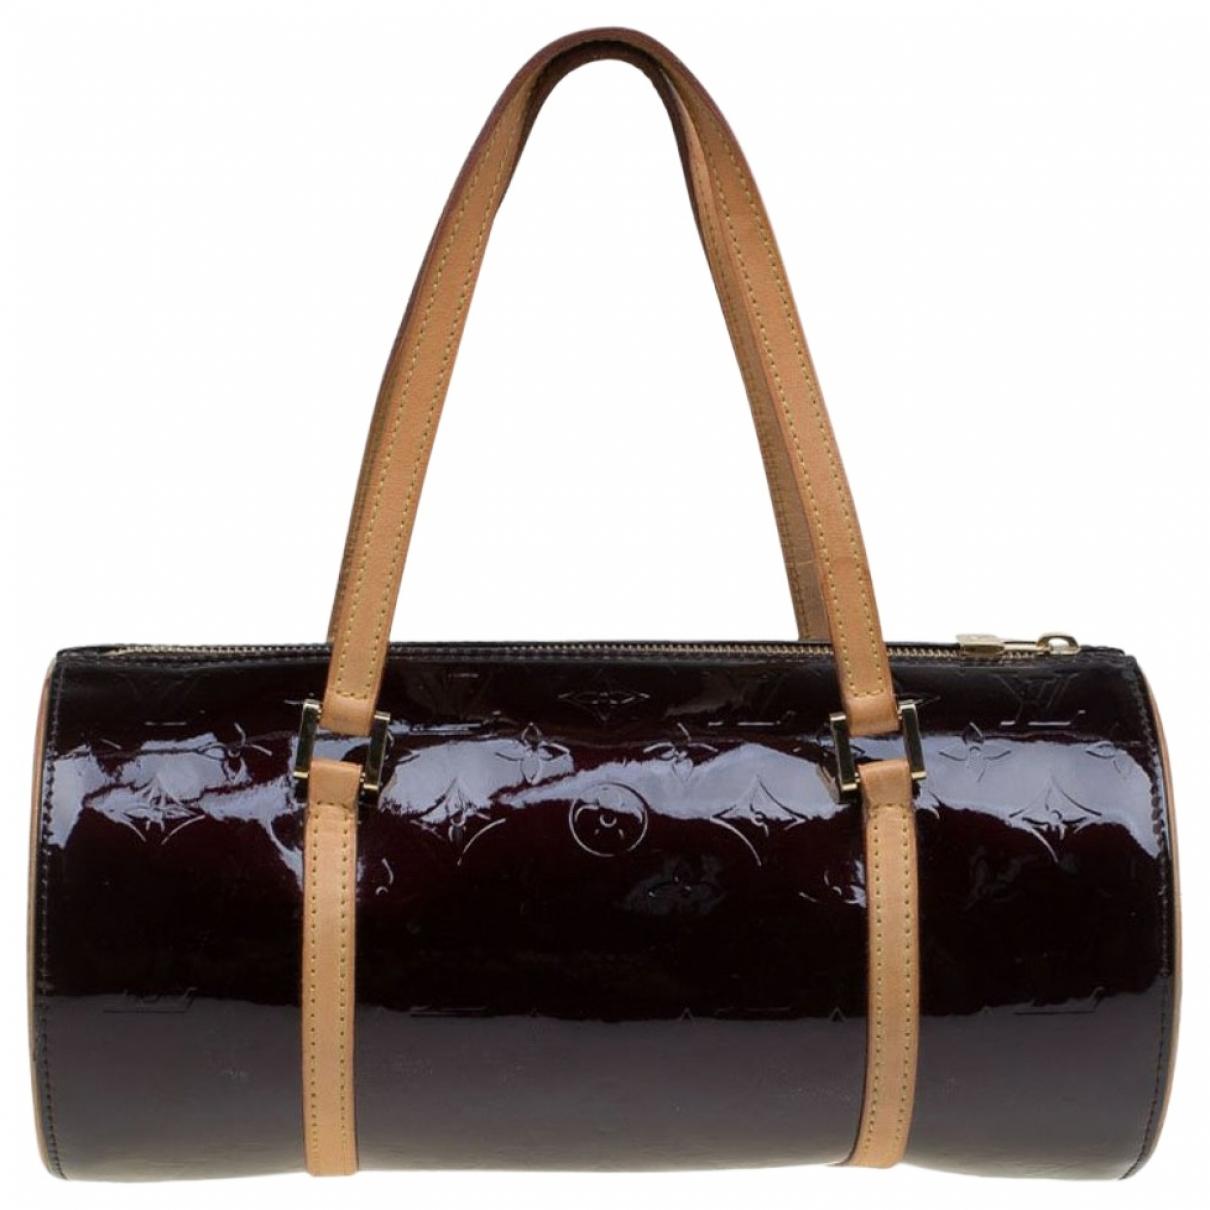 Louis Vuitton Bedford Burgundy Patent Leather Handbag in Black - Lyst